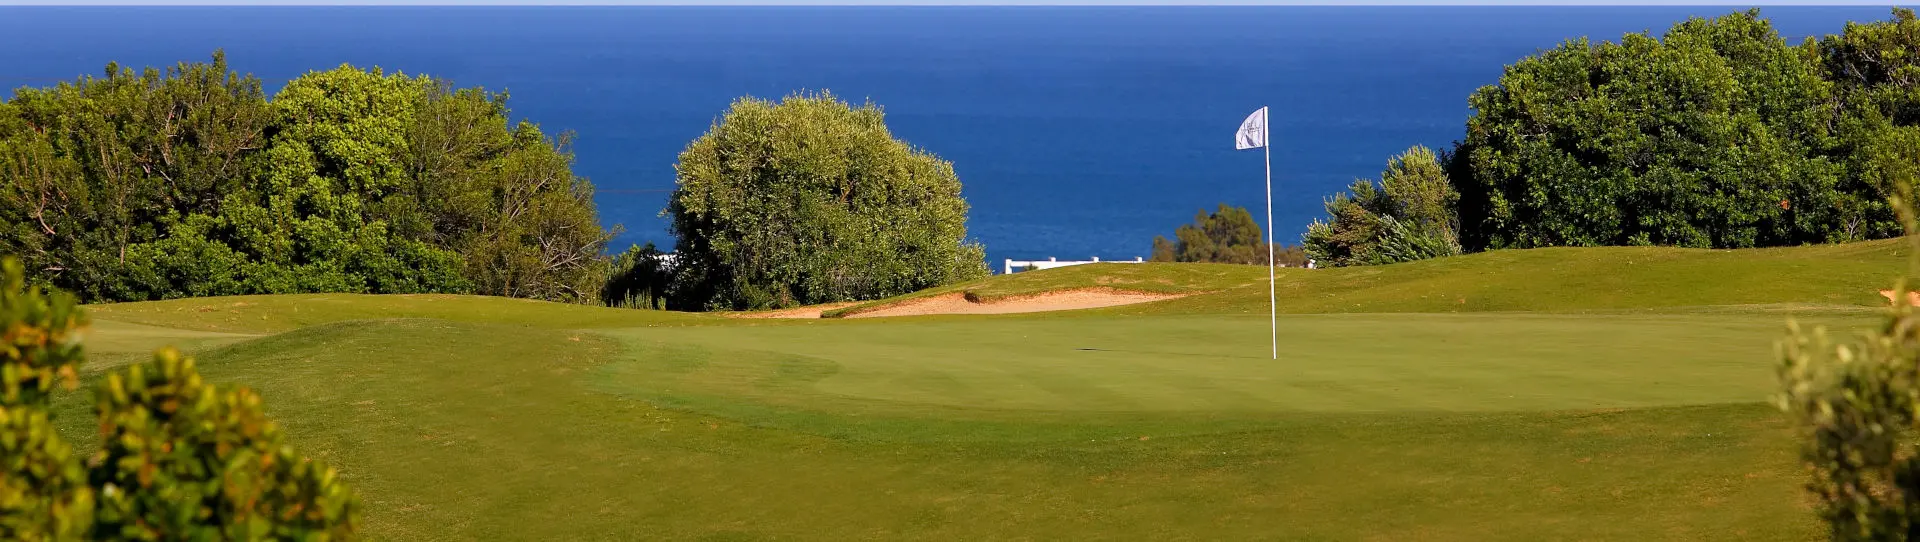 Spain golf courses - Valle Romano Golf - Photo 1